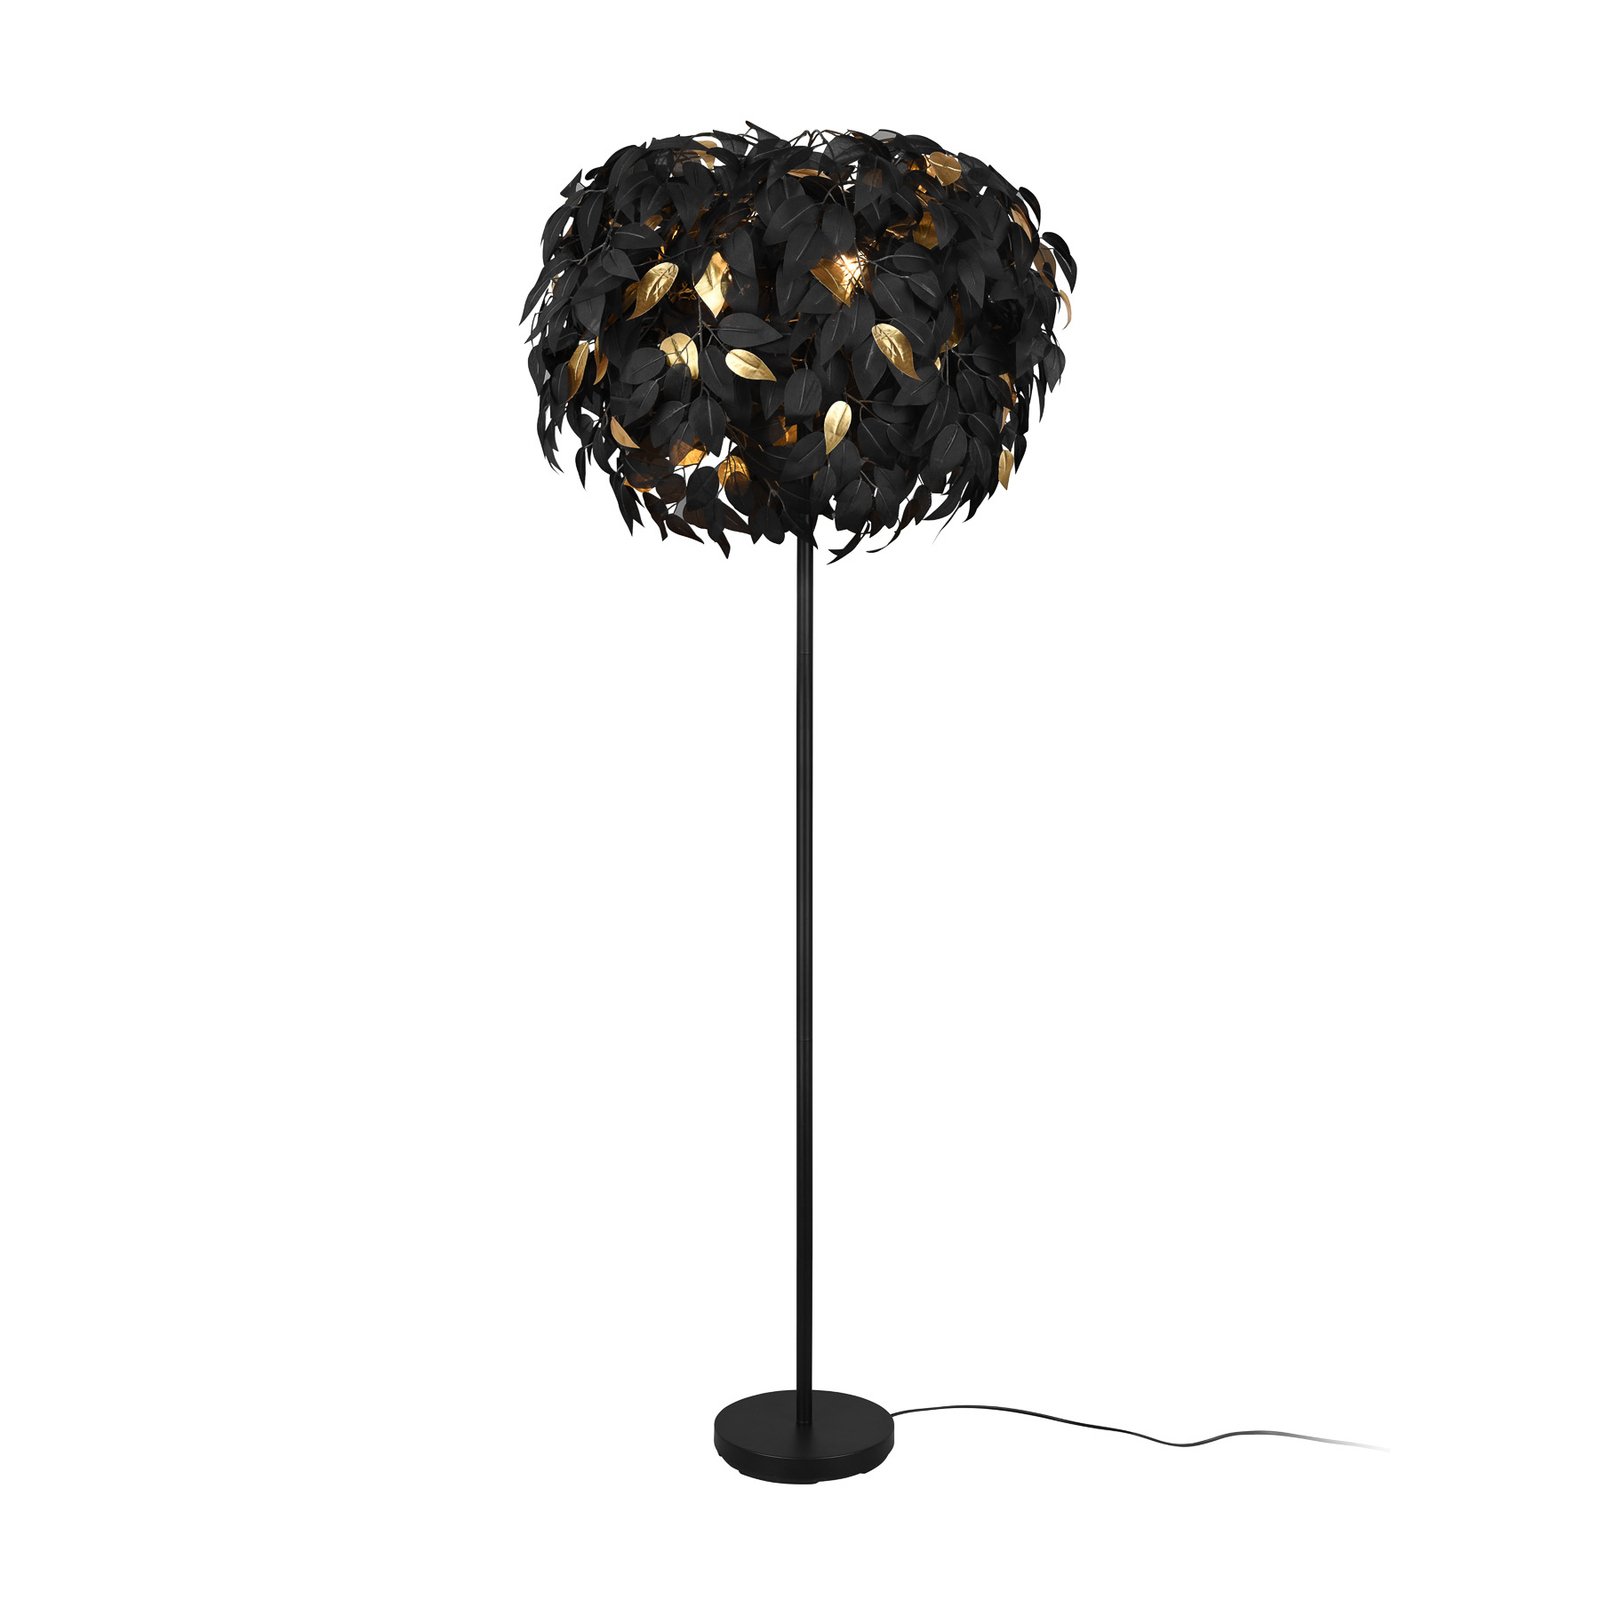 Leavy stāvlampa, melna/zelta, augstums 180 cm, plastmasa